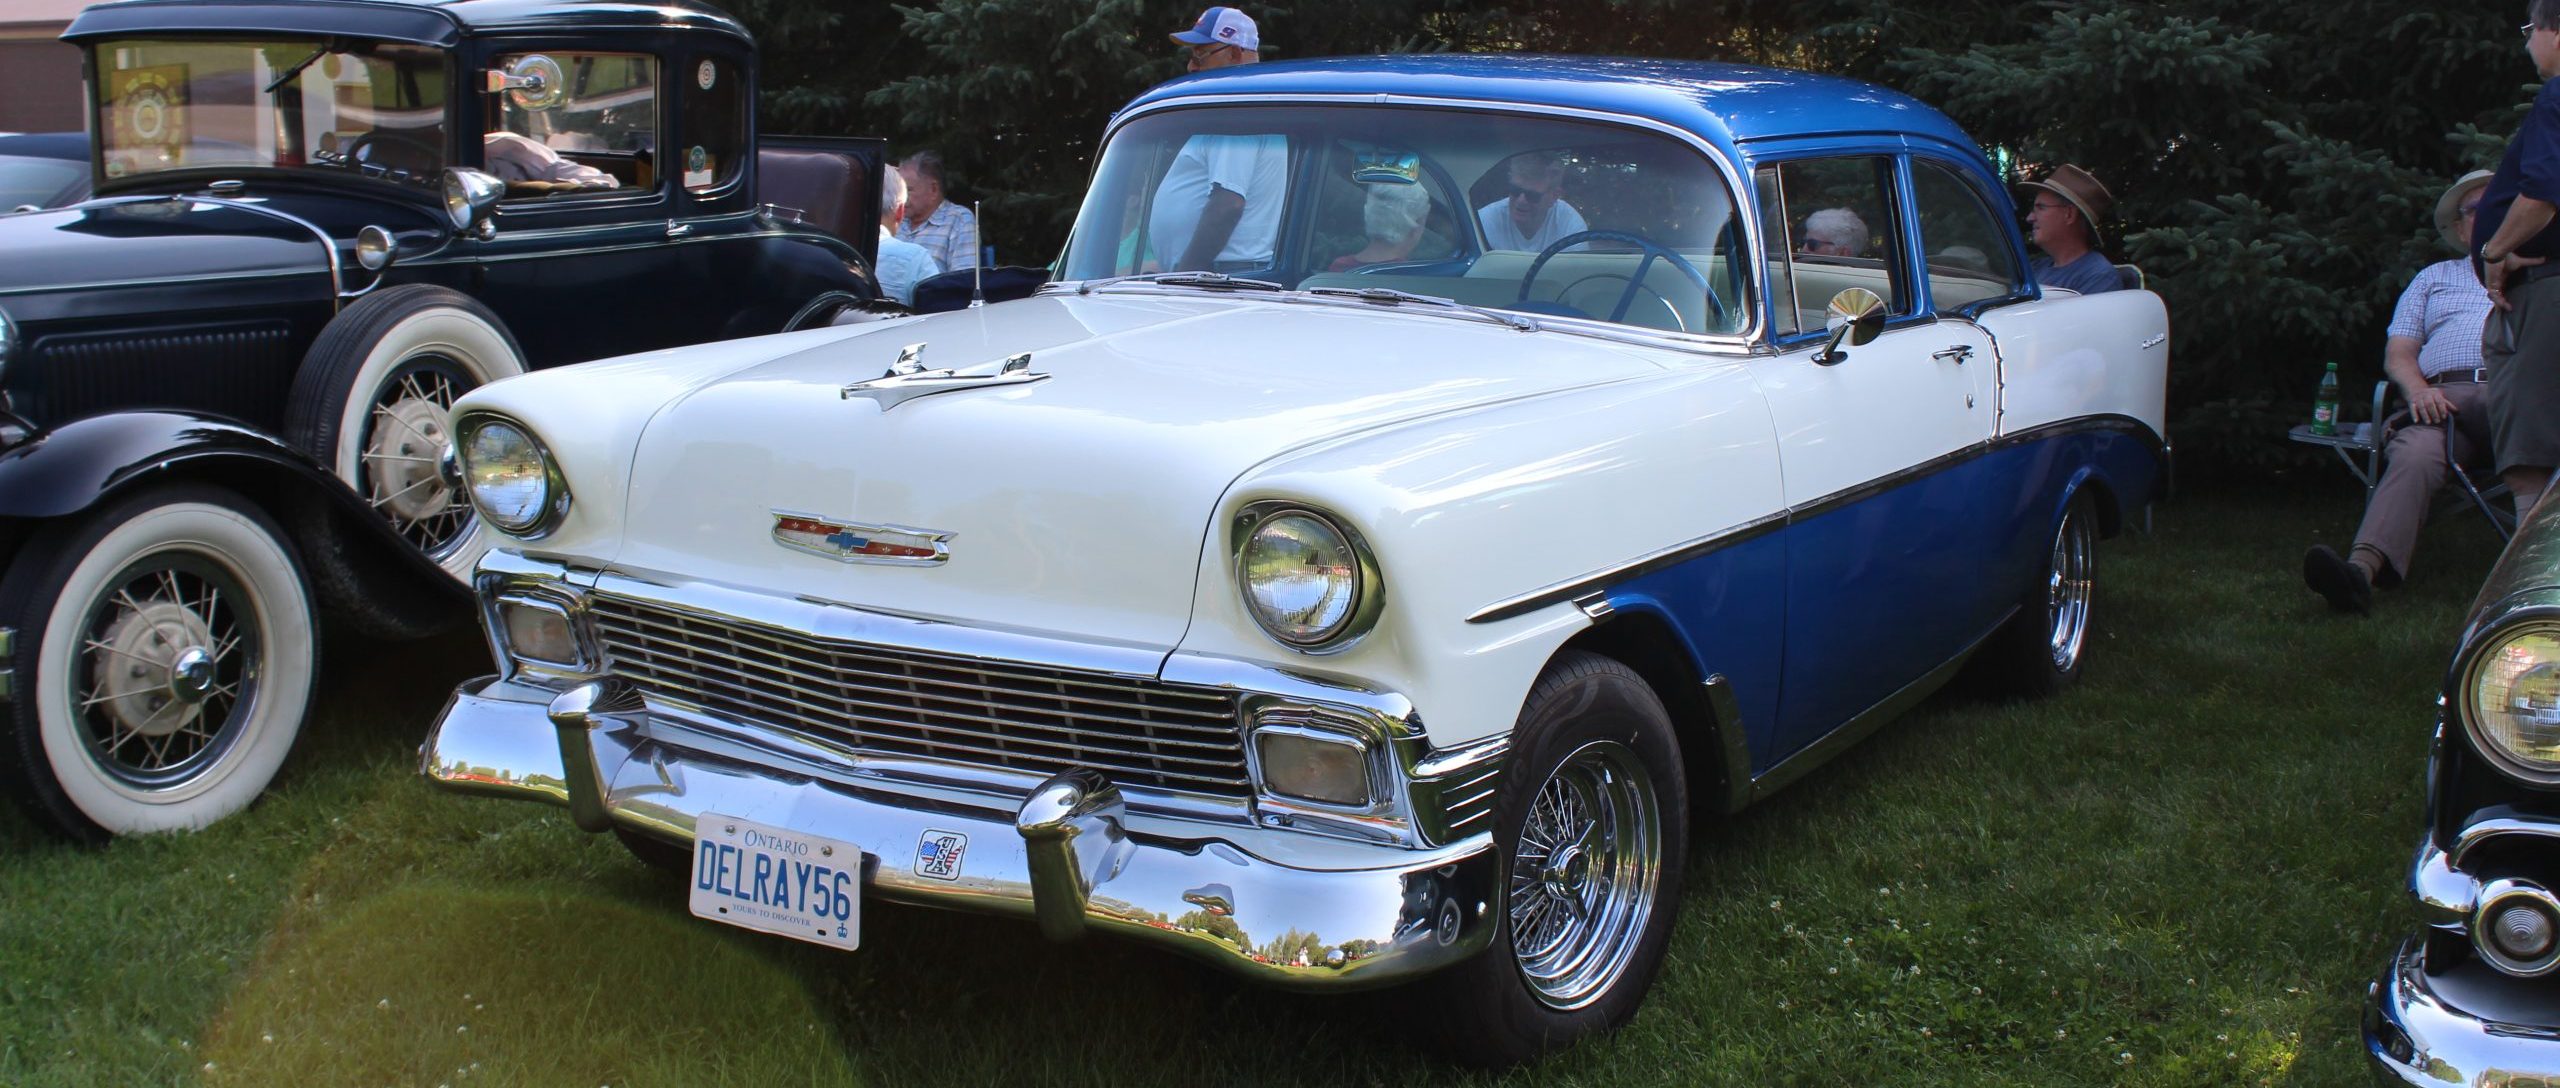 1956 Chevrolet Two-Ten Series Delray – John & Ellen Ball